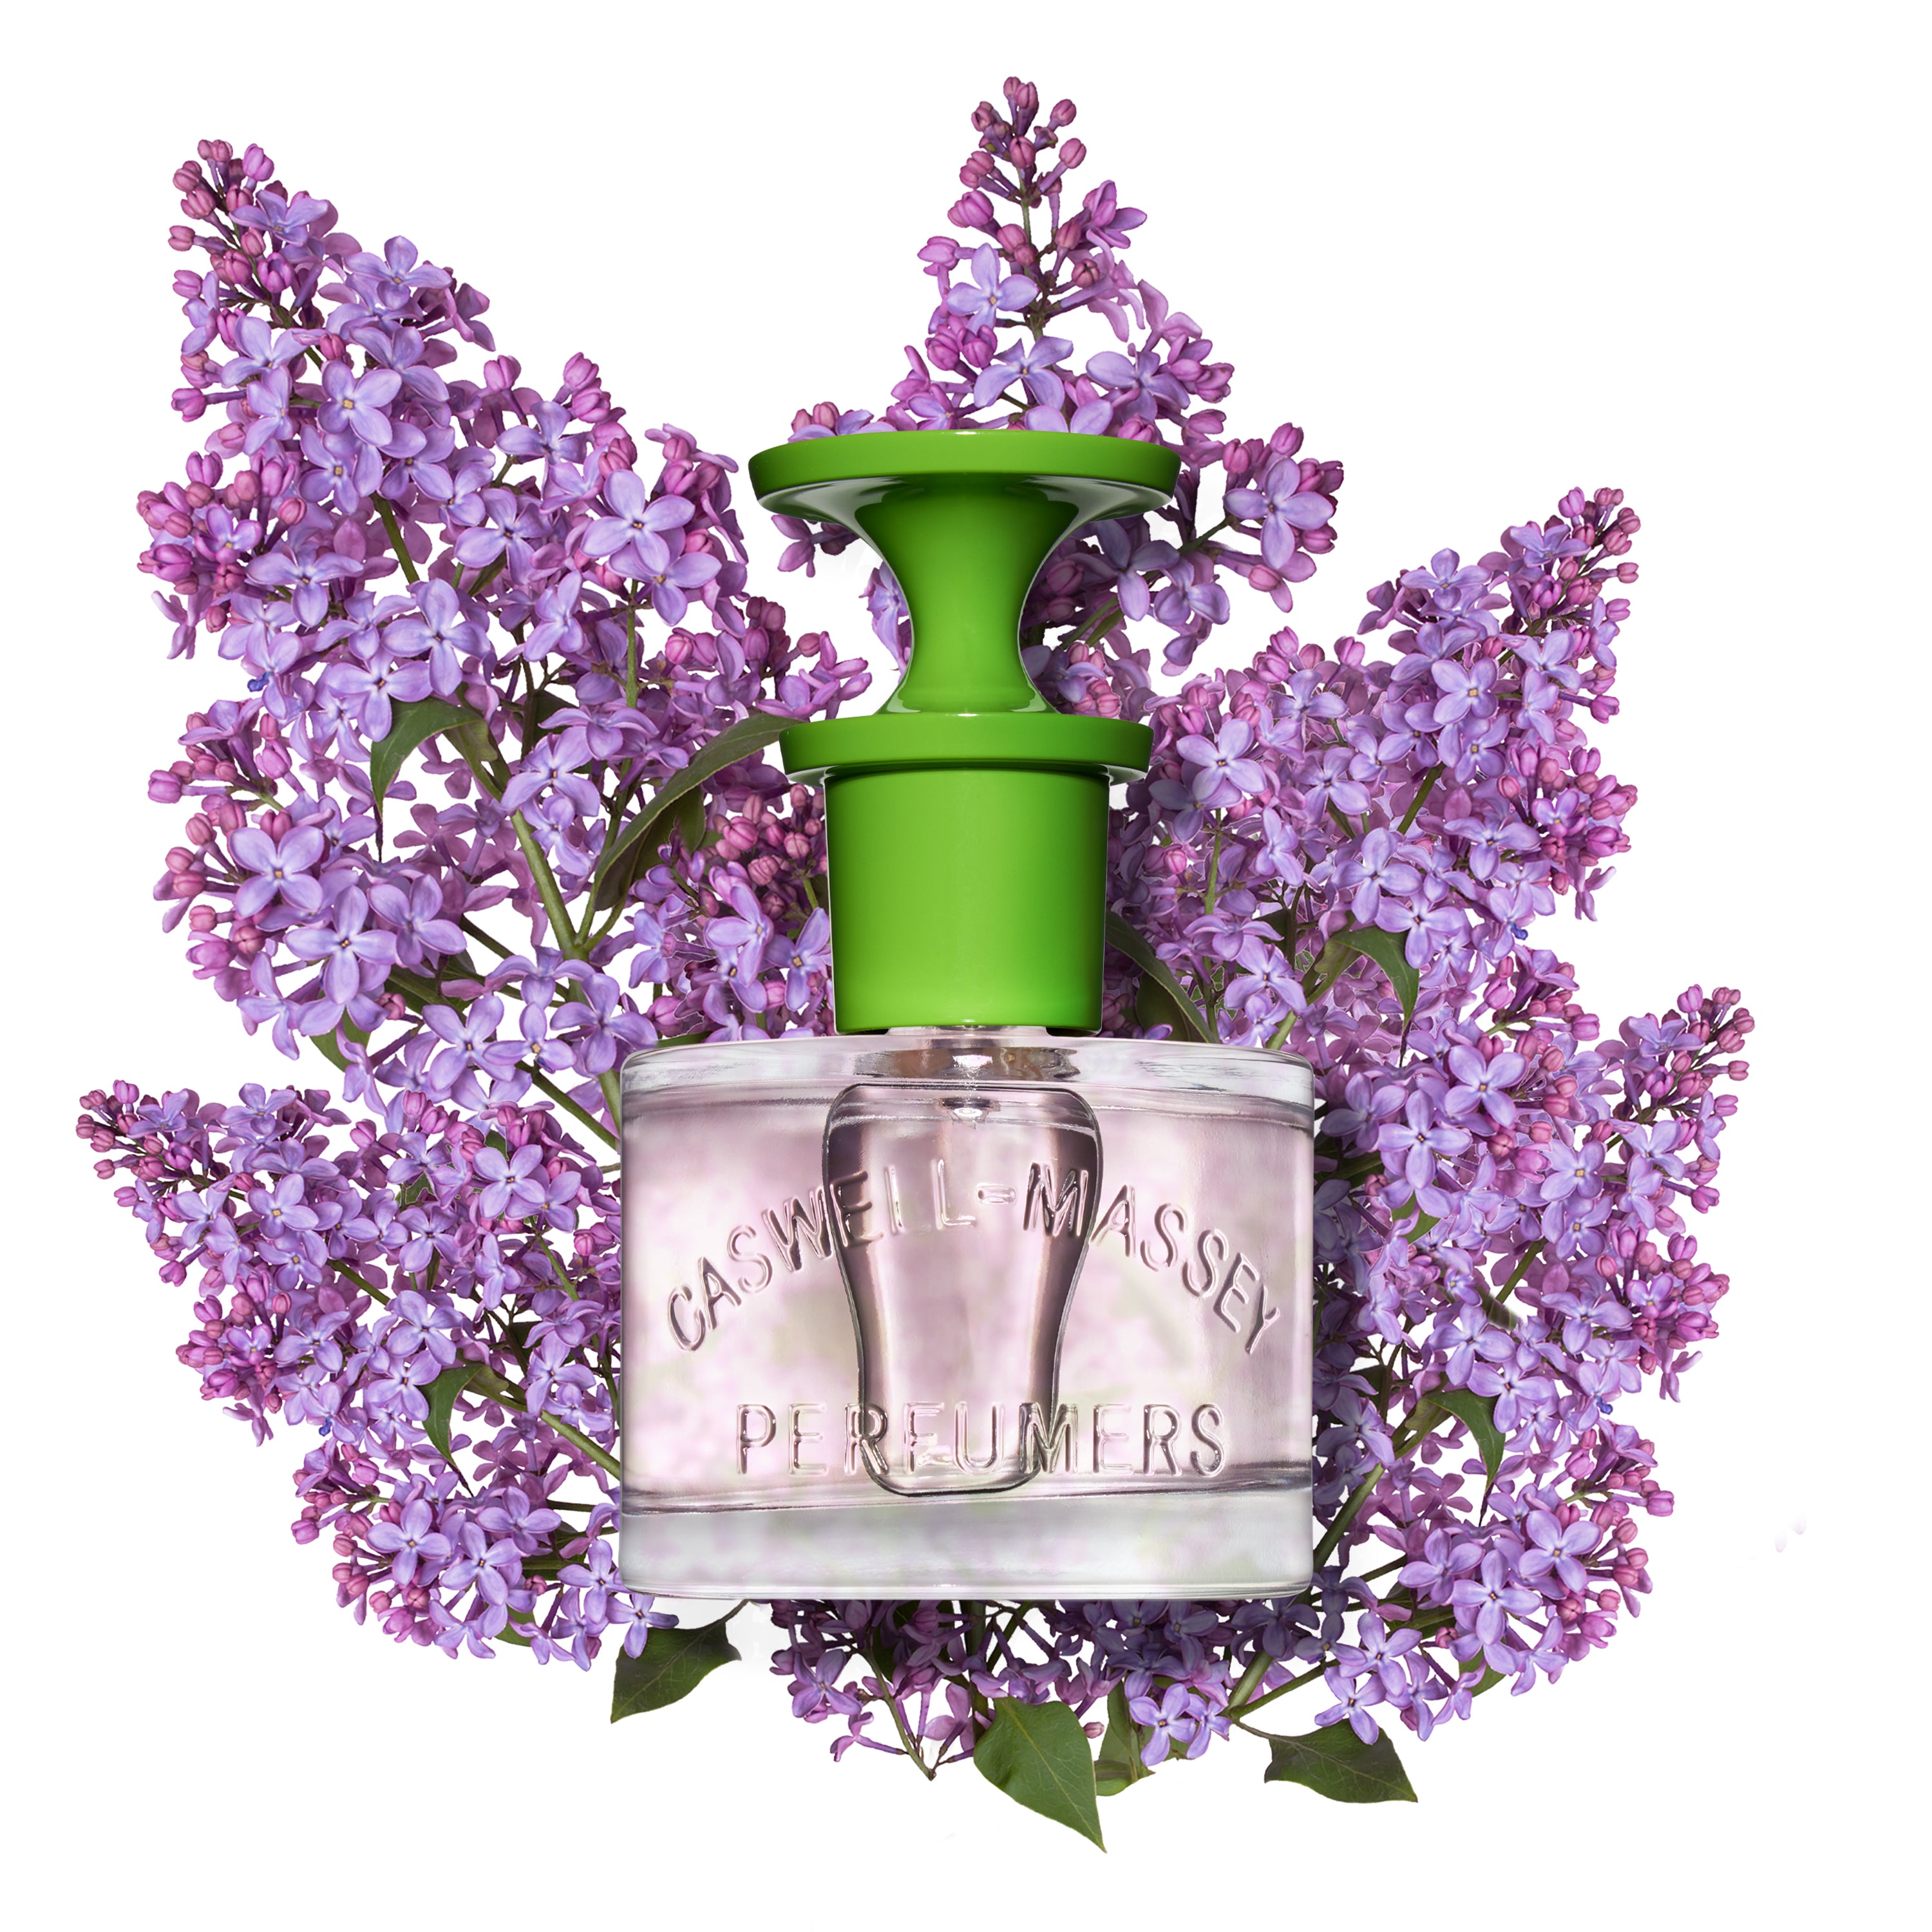 Lilac Eau de Toilette, Fine Fragrance by Caswell-Massey, 60mL Full Size shown in front of fresh purple lilacs